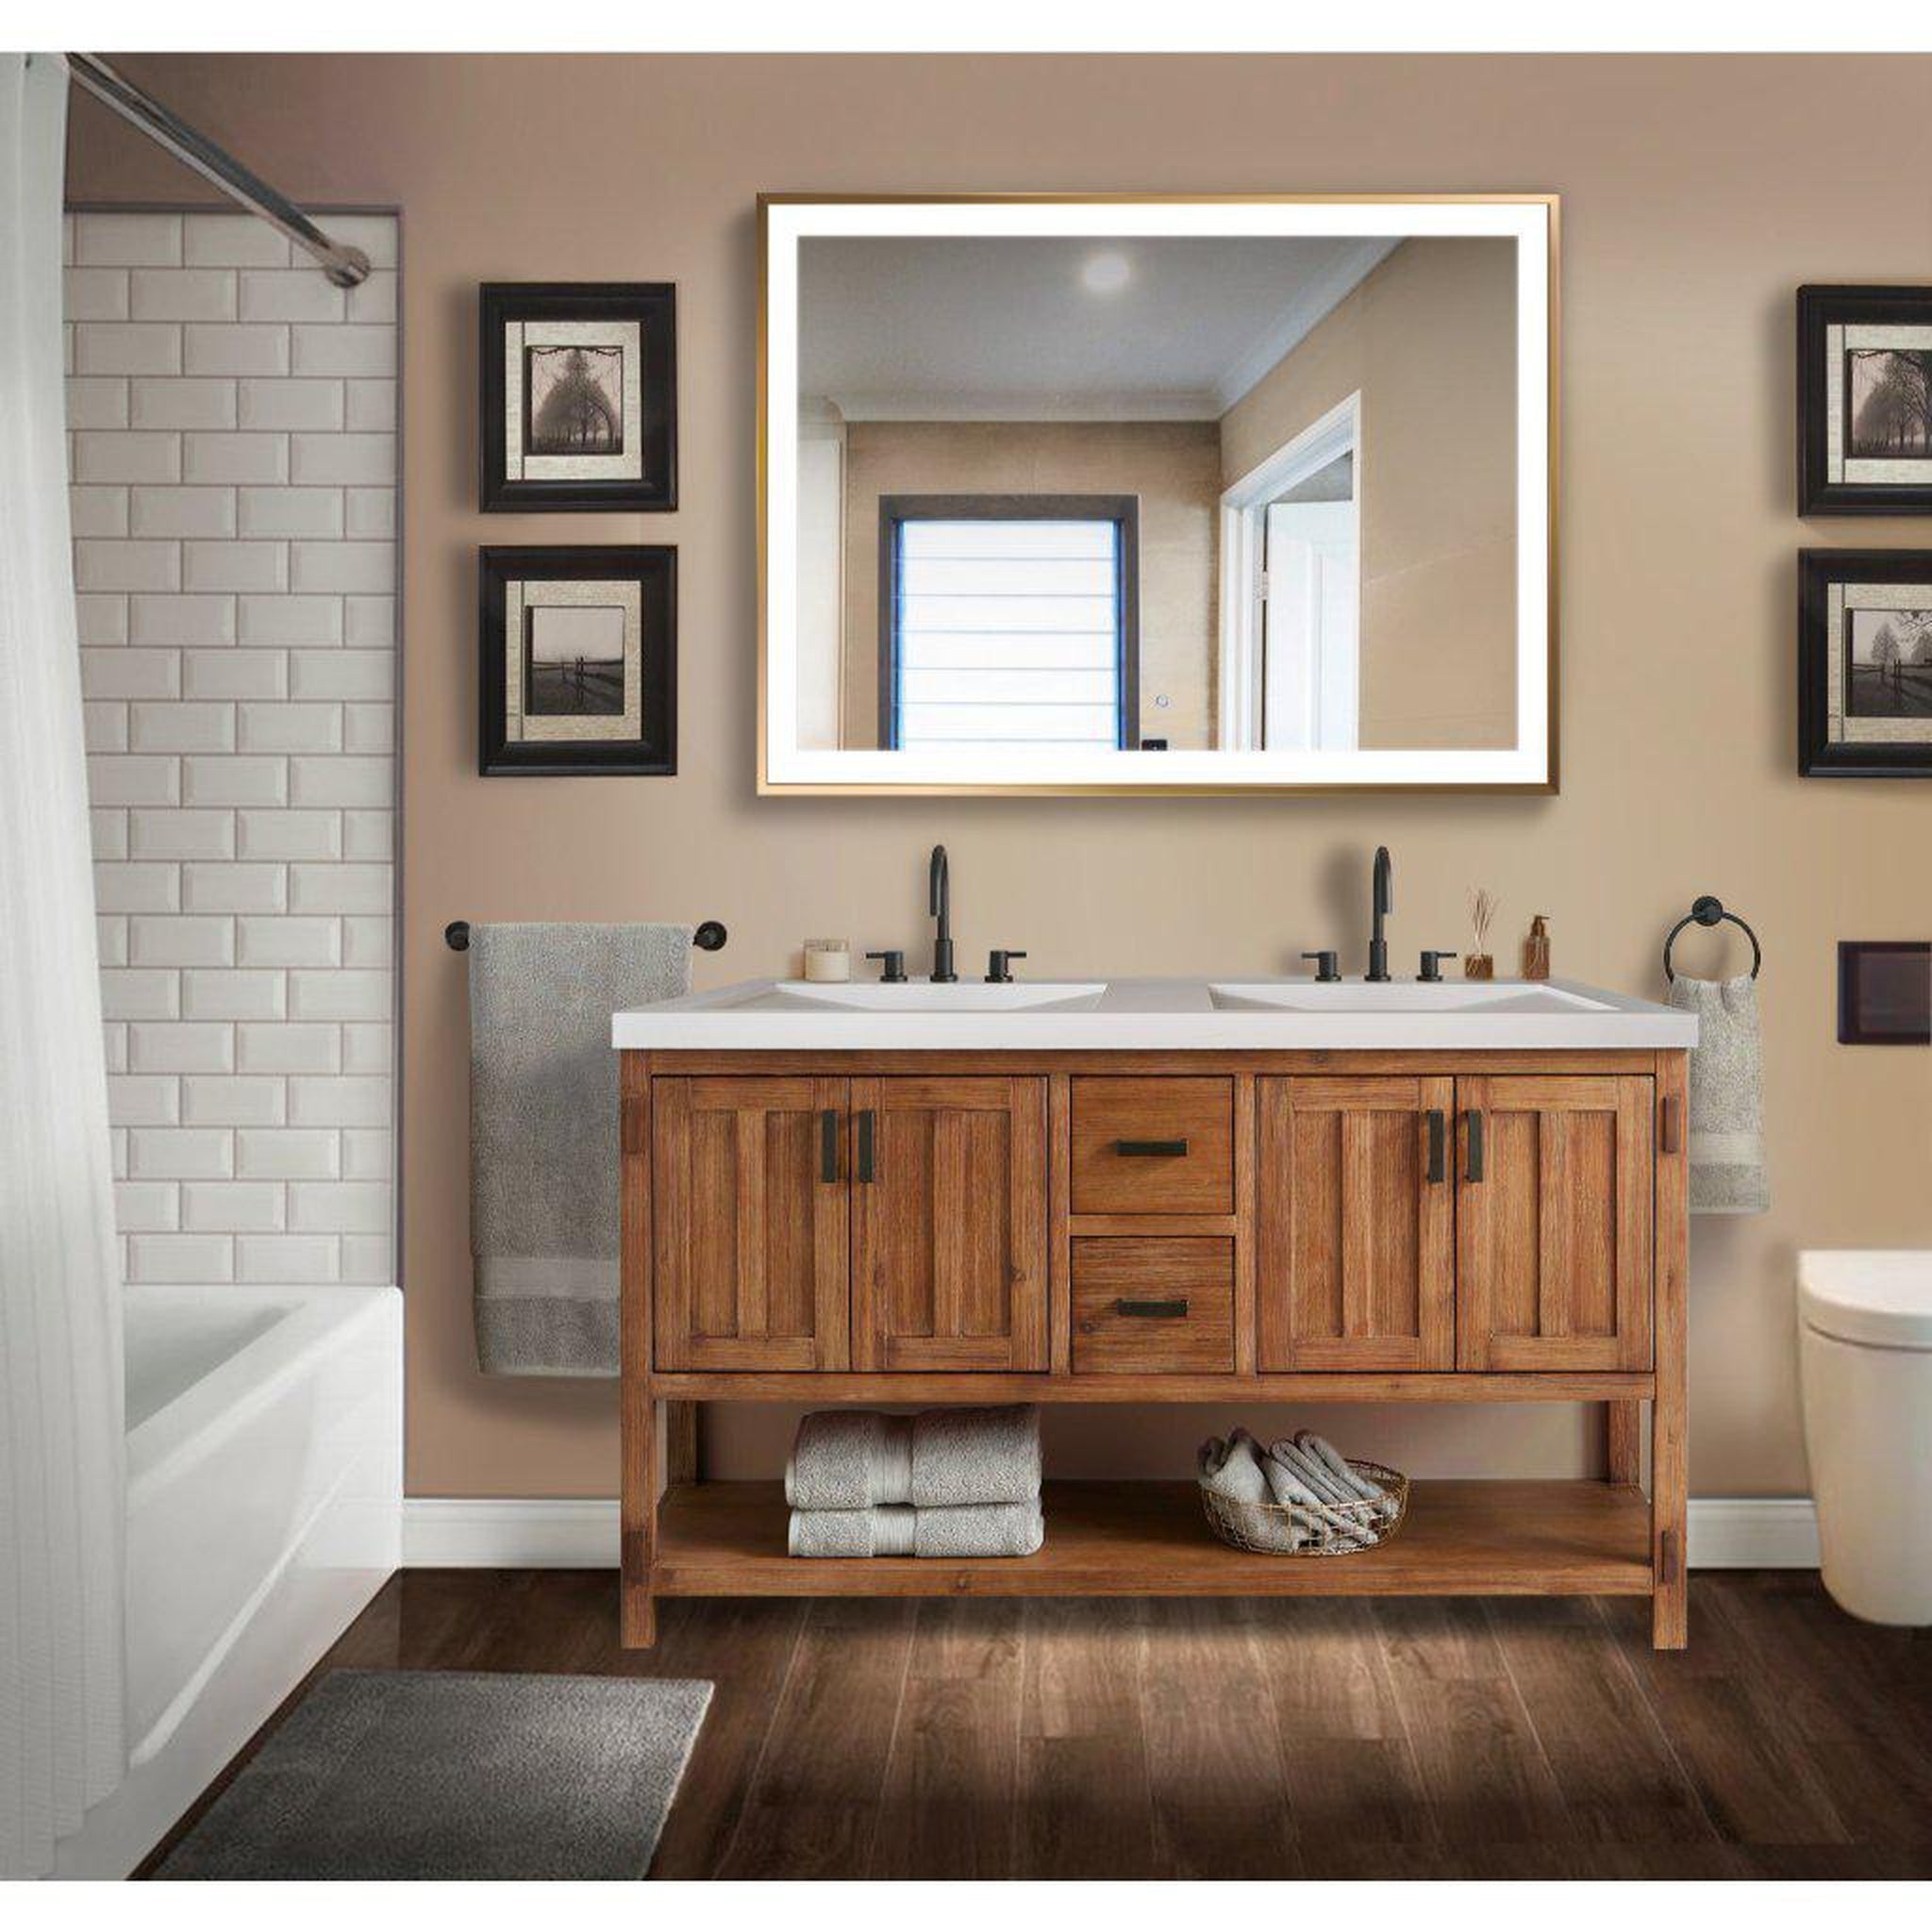 Krugg Reflections, Krugg Reflections Soho 48" x 36" 5000K Rectangular Matte Gold Wall-Mounted Framed LED Bathroom Vanity Mirror With Built-in Defogger and Dimmer